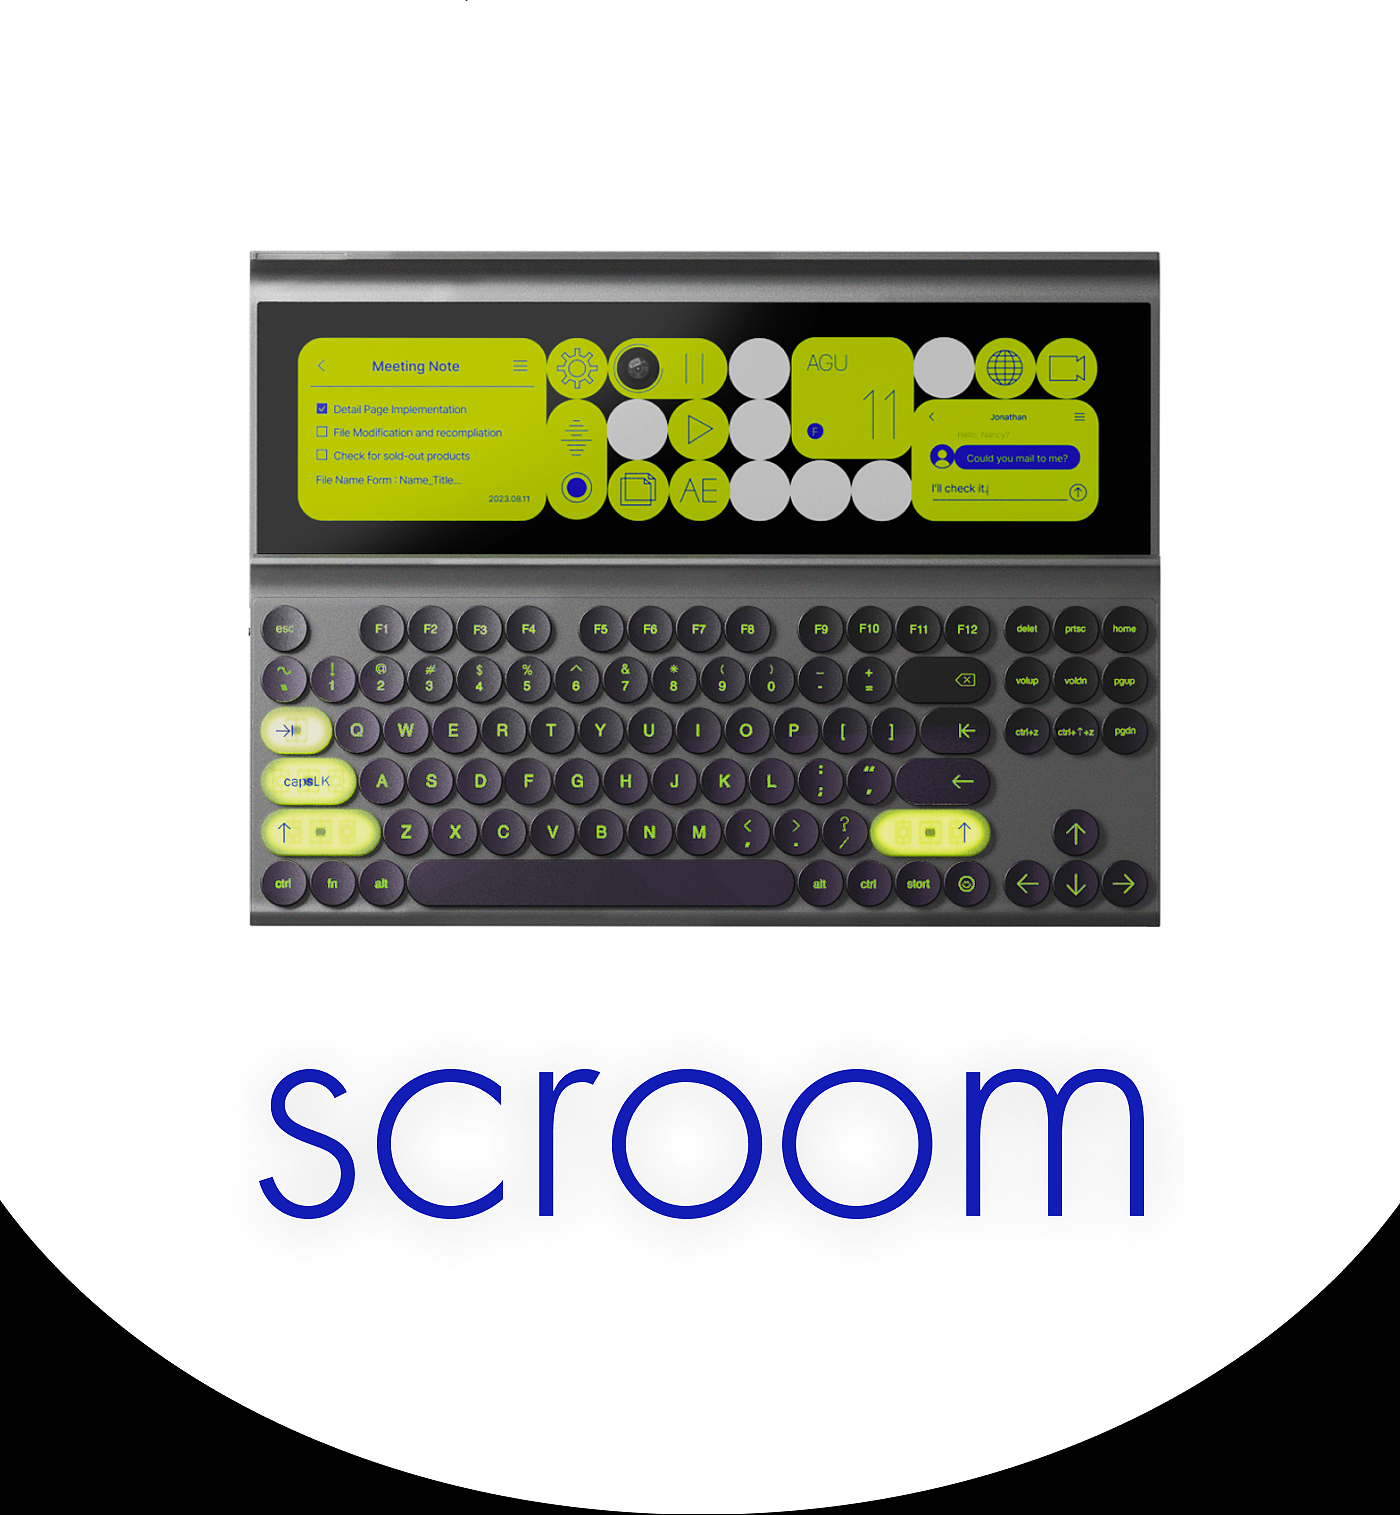 SCROOM，键盘，显示器，工作设备，